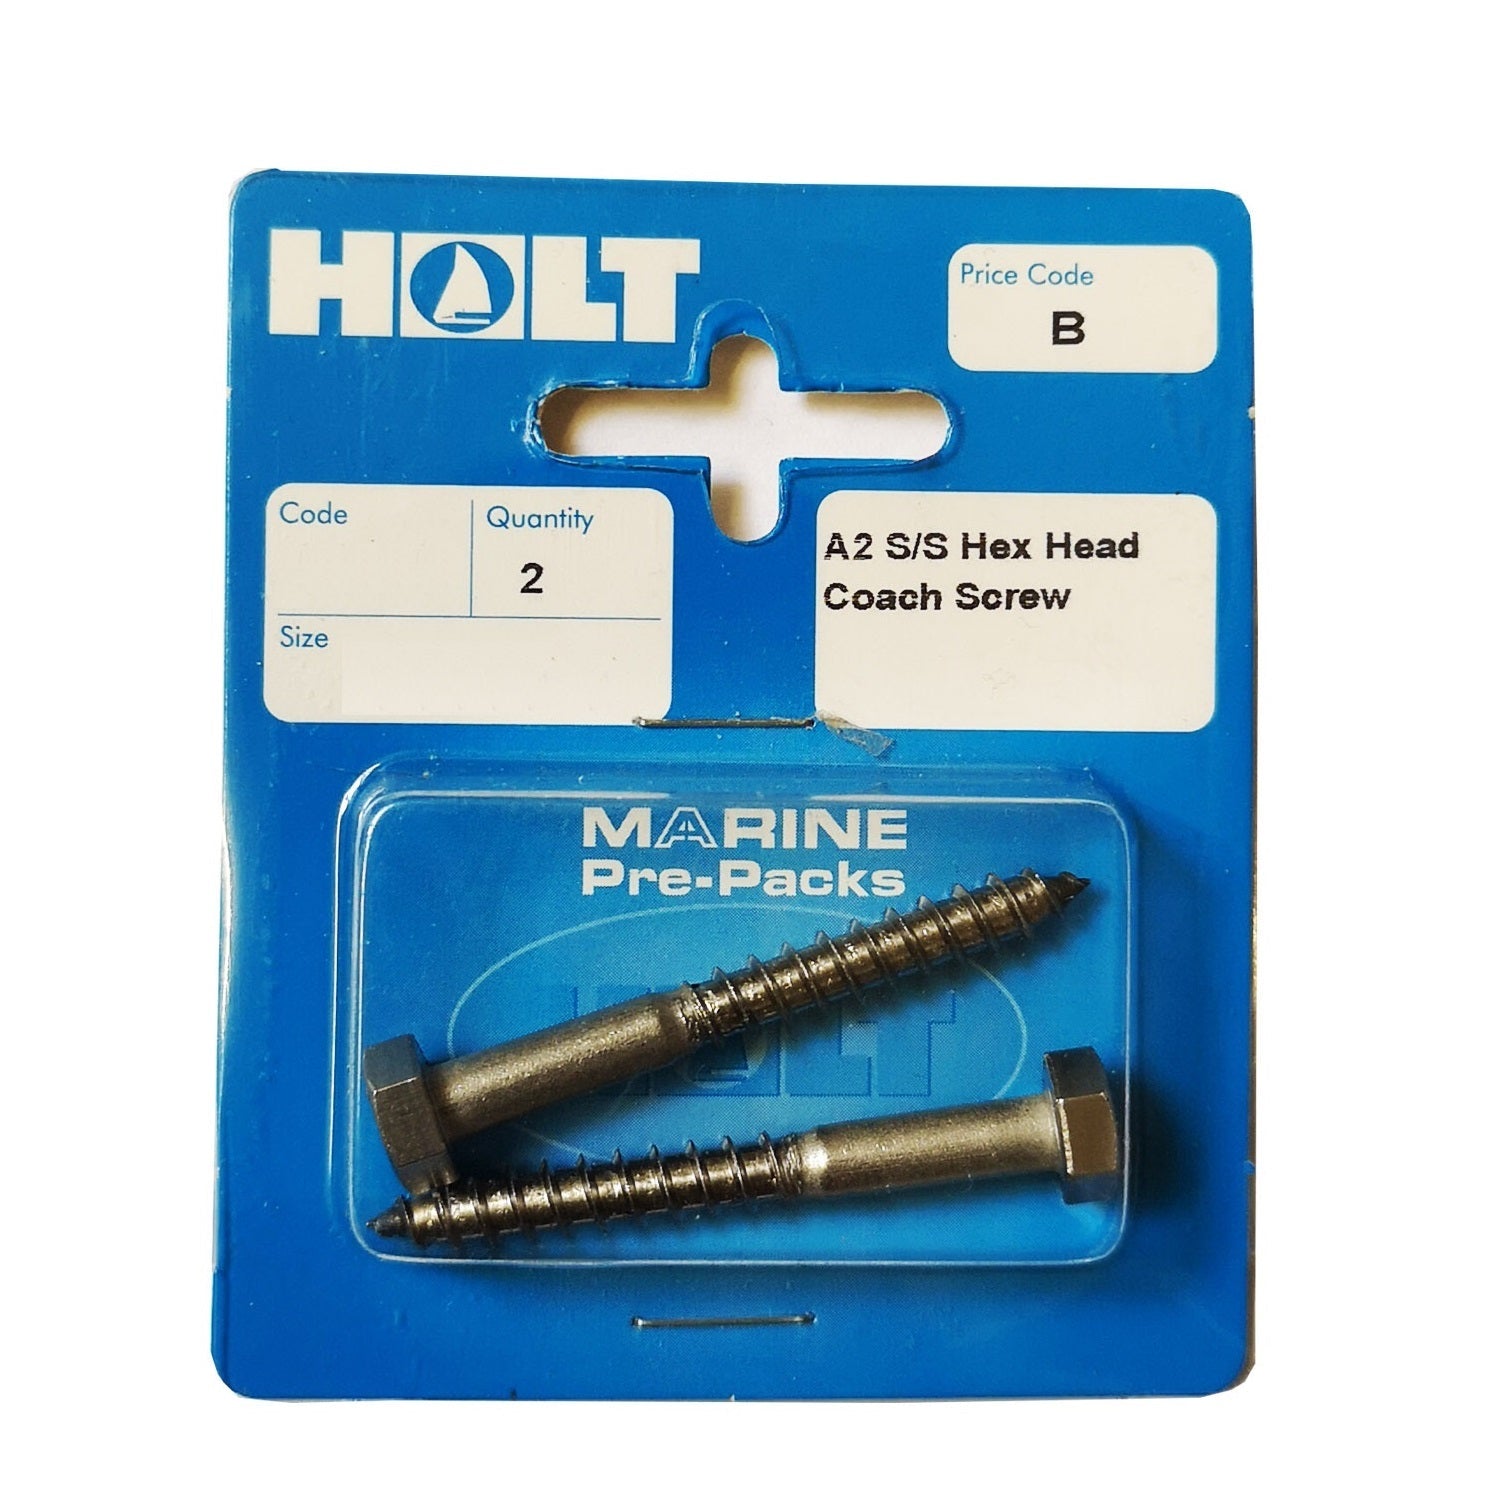 Holt Marine M6 Hex Head Stainless Steel Coach Screws Pkt2 - Various Lengths - Premium M6 Coach Screw from Holt Marine - Just $2.6! Shop now at W Hurst & Son (IW) Ltd